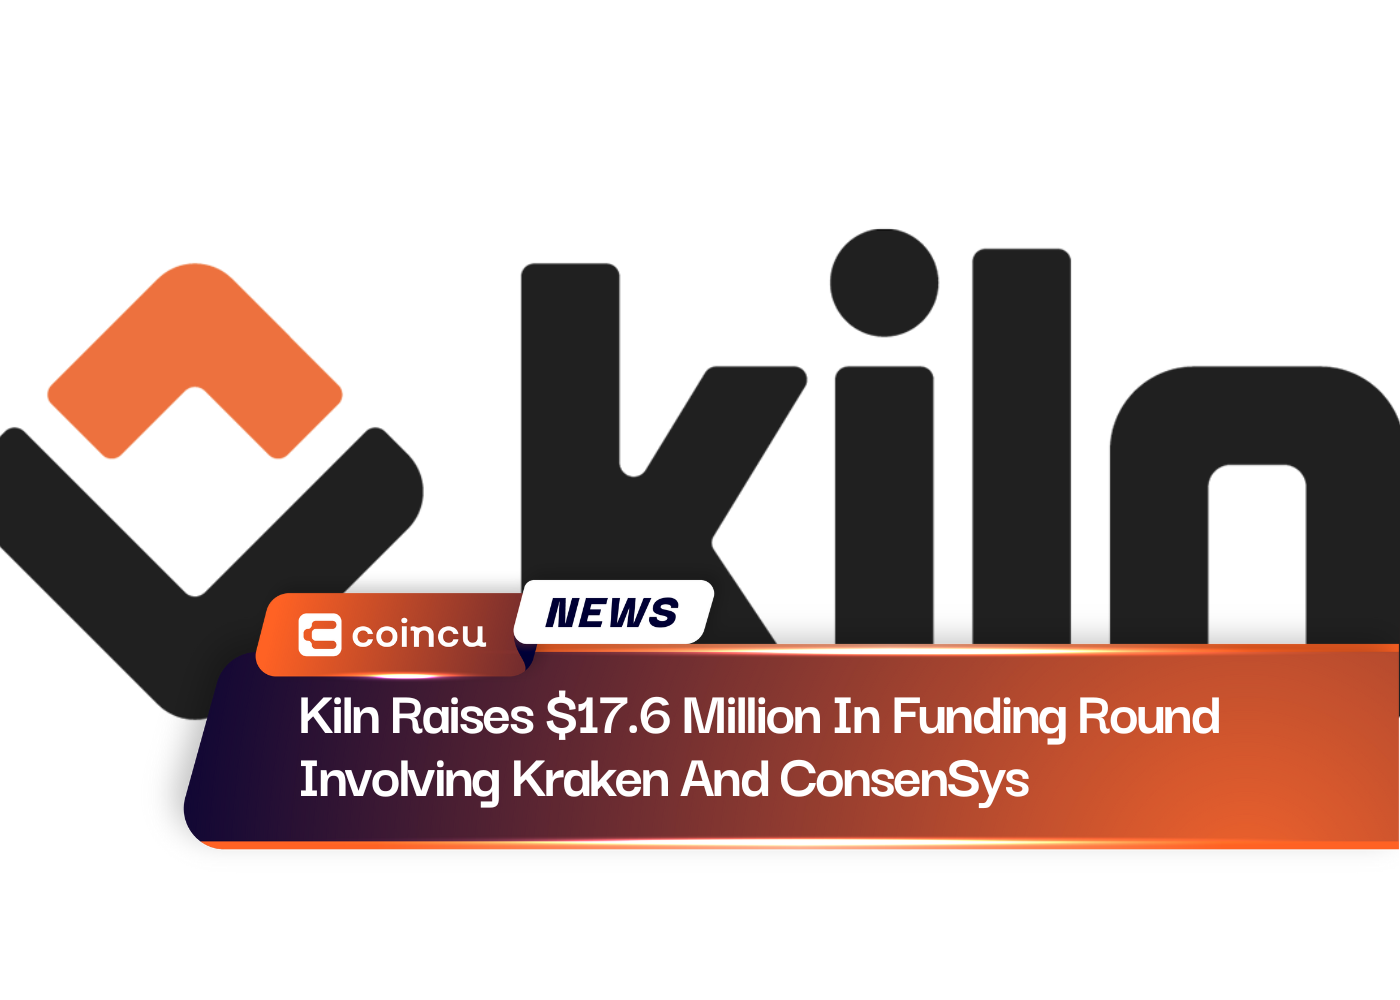 Kiln Raises $17.6 Million In Funding Round Involving Kraken And ConsenSys